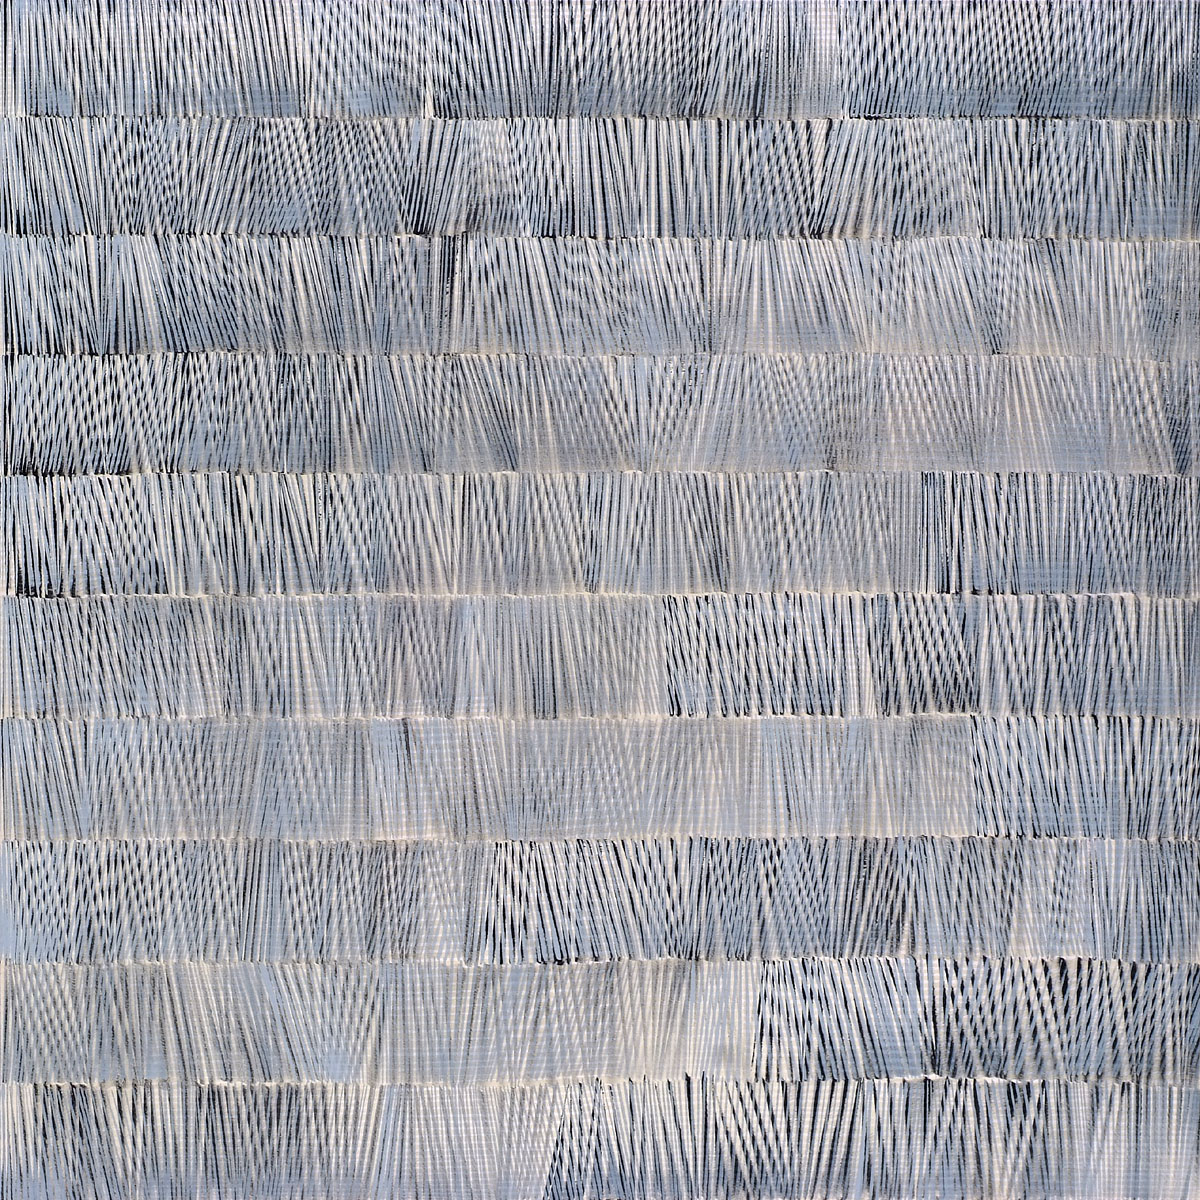 Nikola Dimitrov, Aria I, 2011, 250 x 250 cm, Pigmente, Bindemittel, Lösungsmittel auf Leinwand